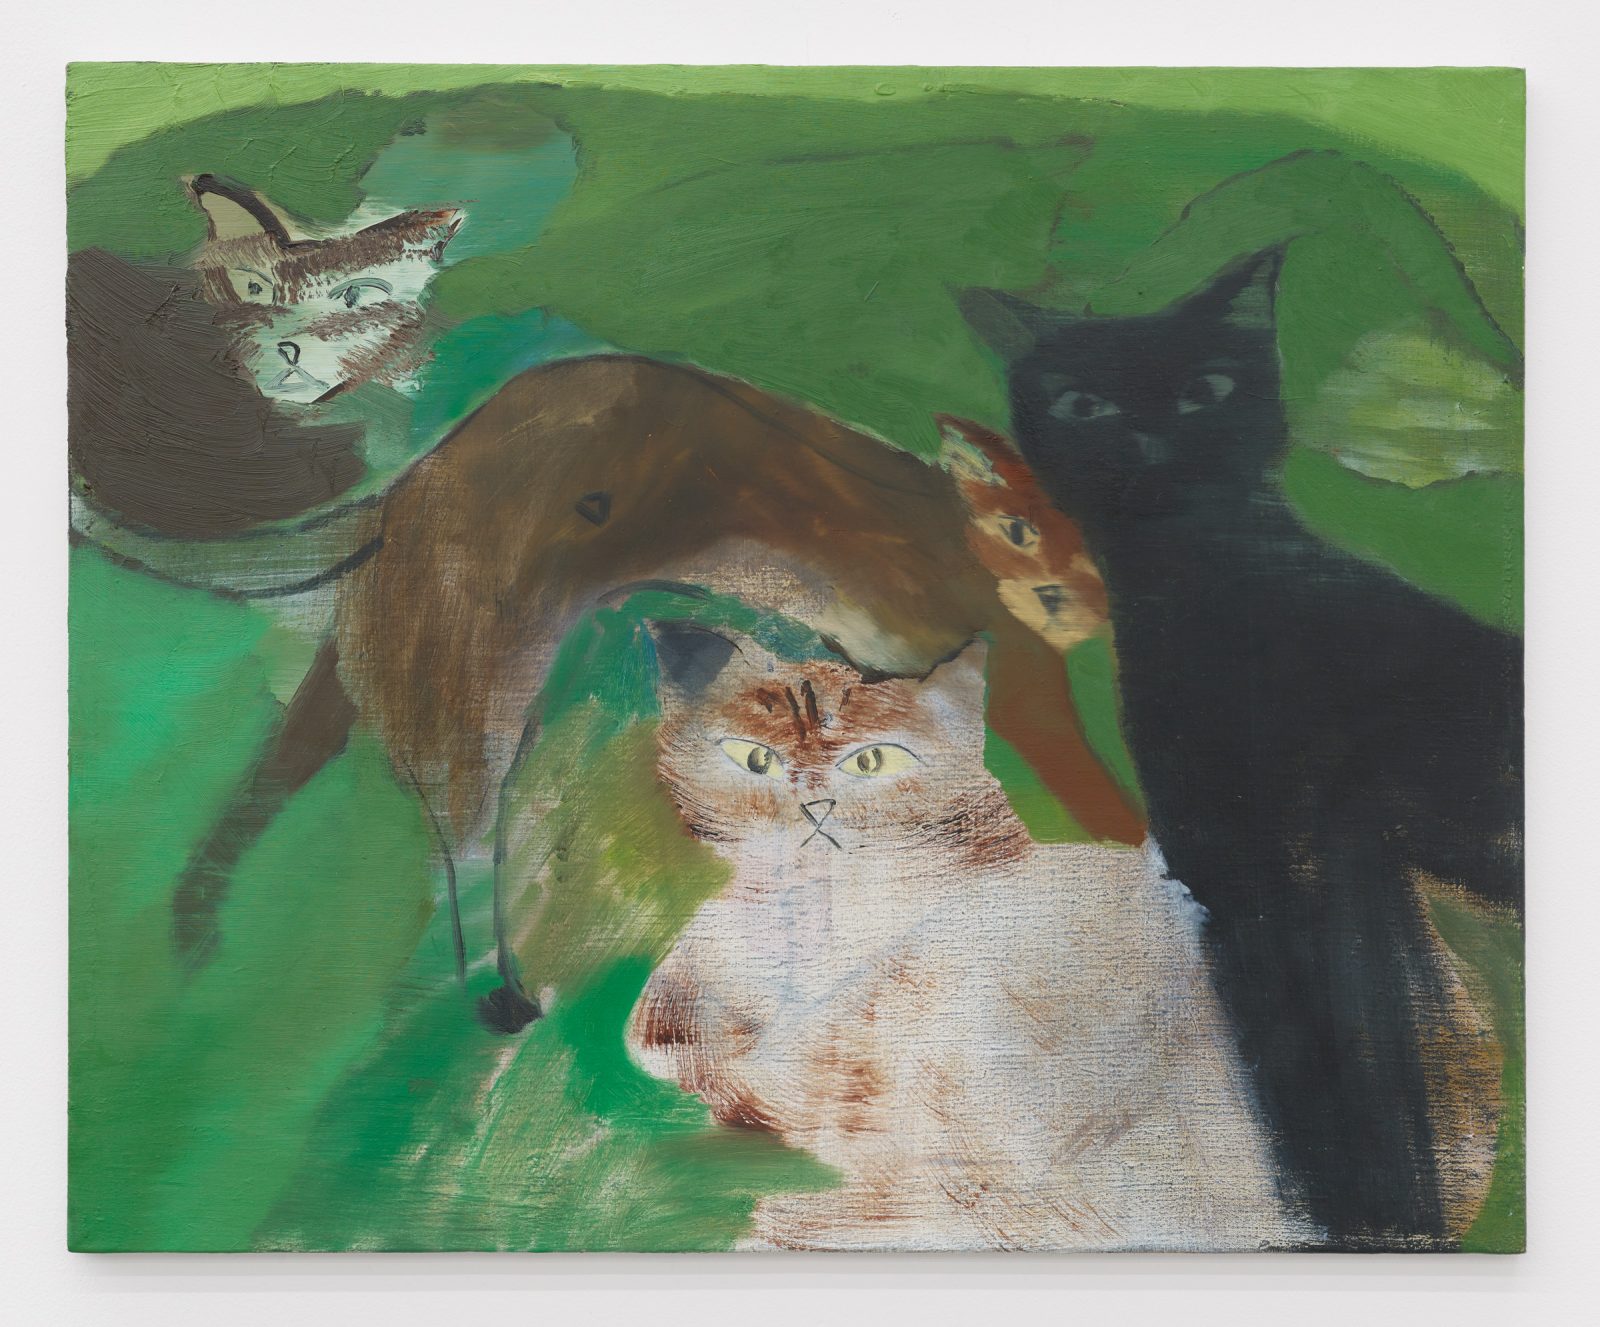 Yu Nishimura
cat hill
2021
oil on canvas
53 × 65 cm